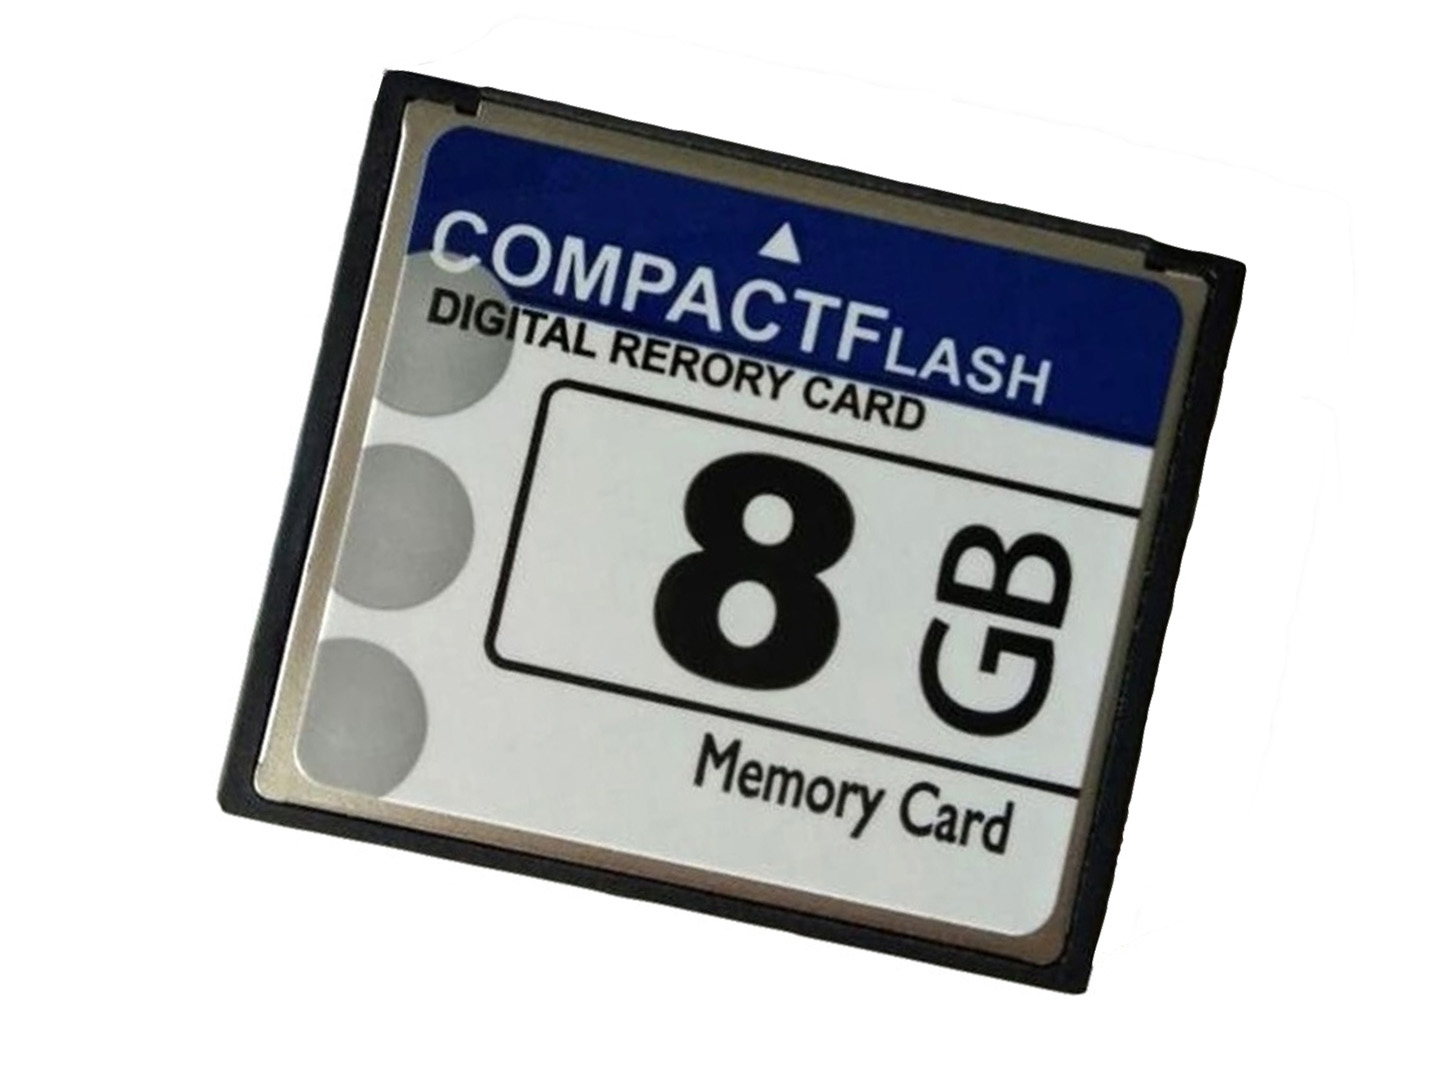 OEM CF 8GB Card